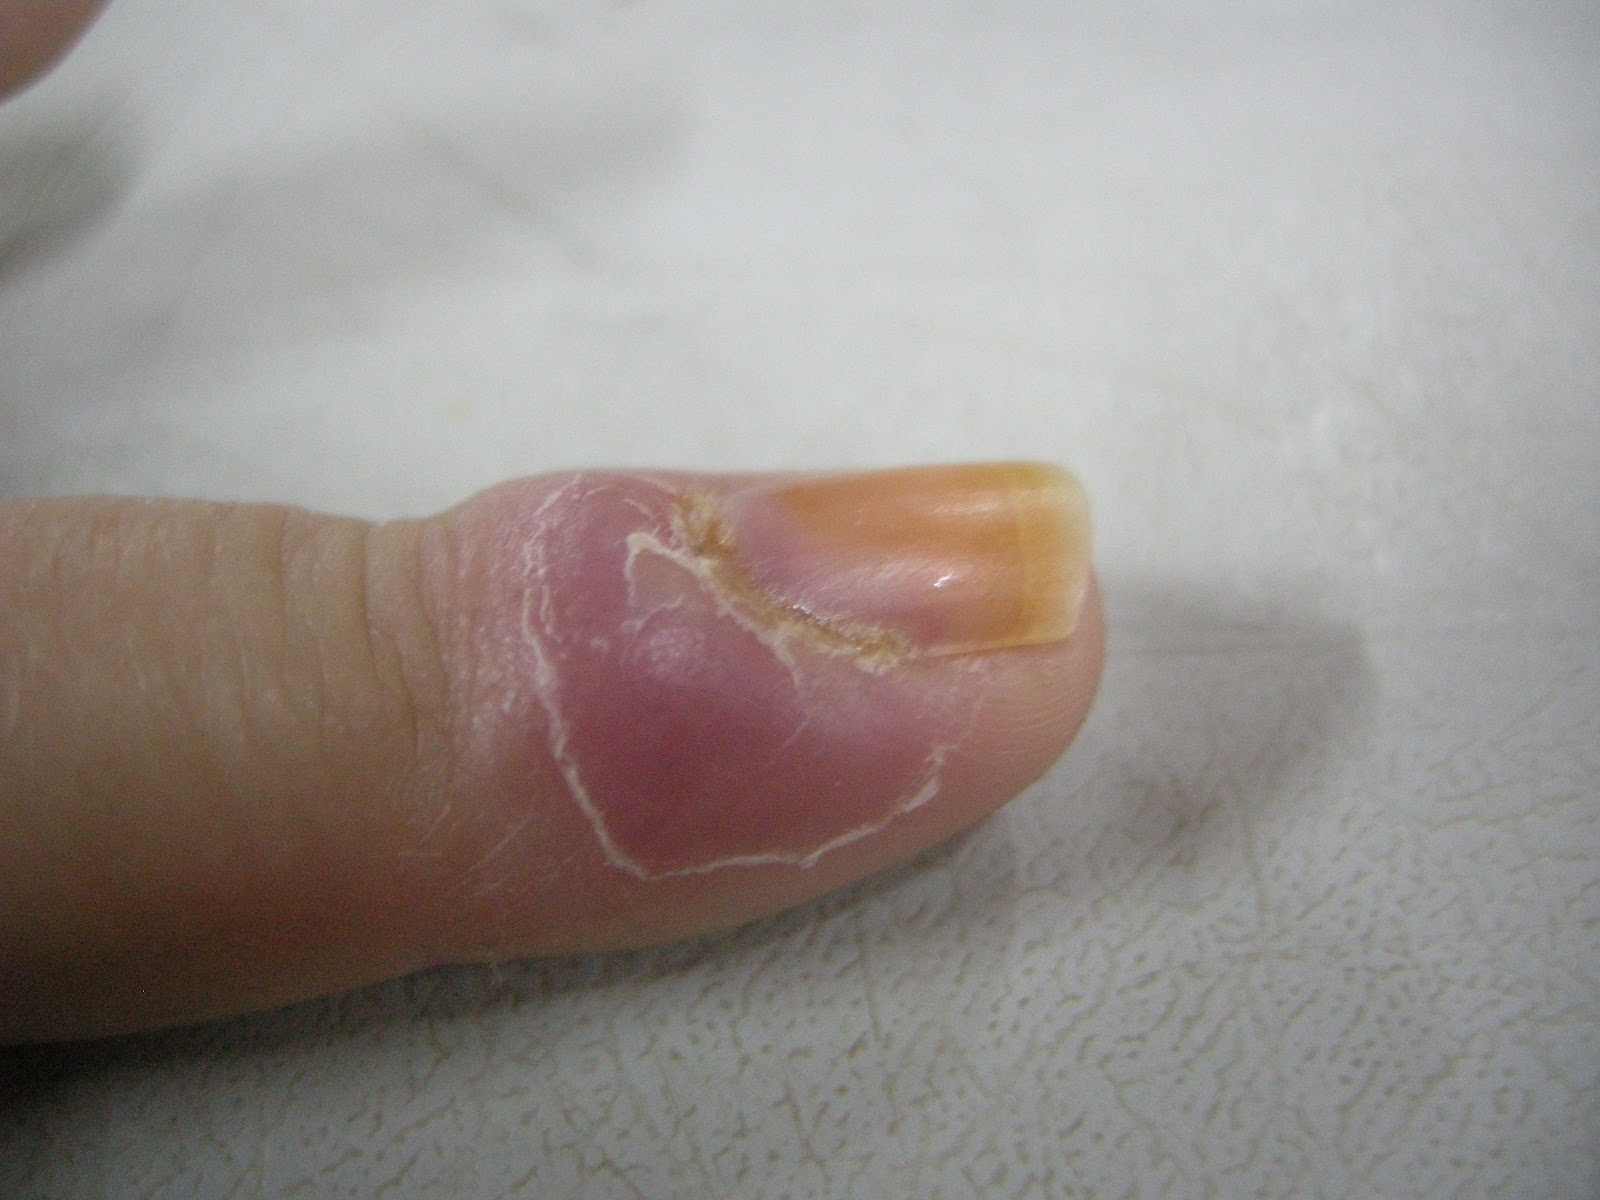 Paronychia (Nail Infection) Treatment: First Aid ...